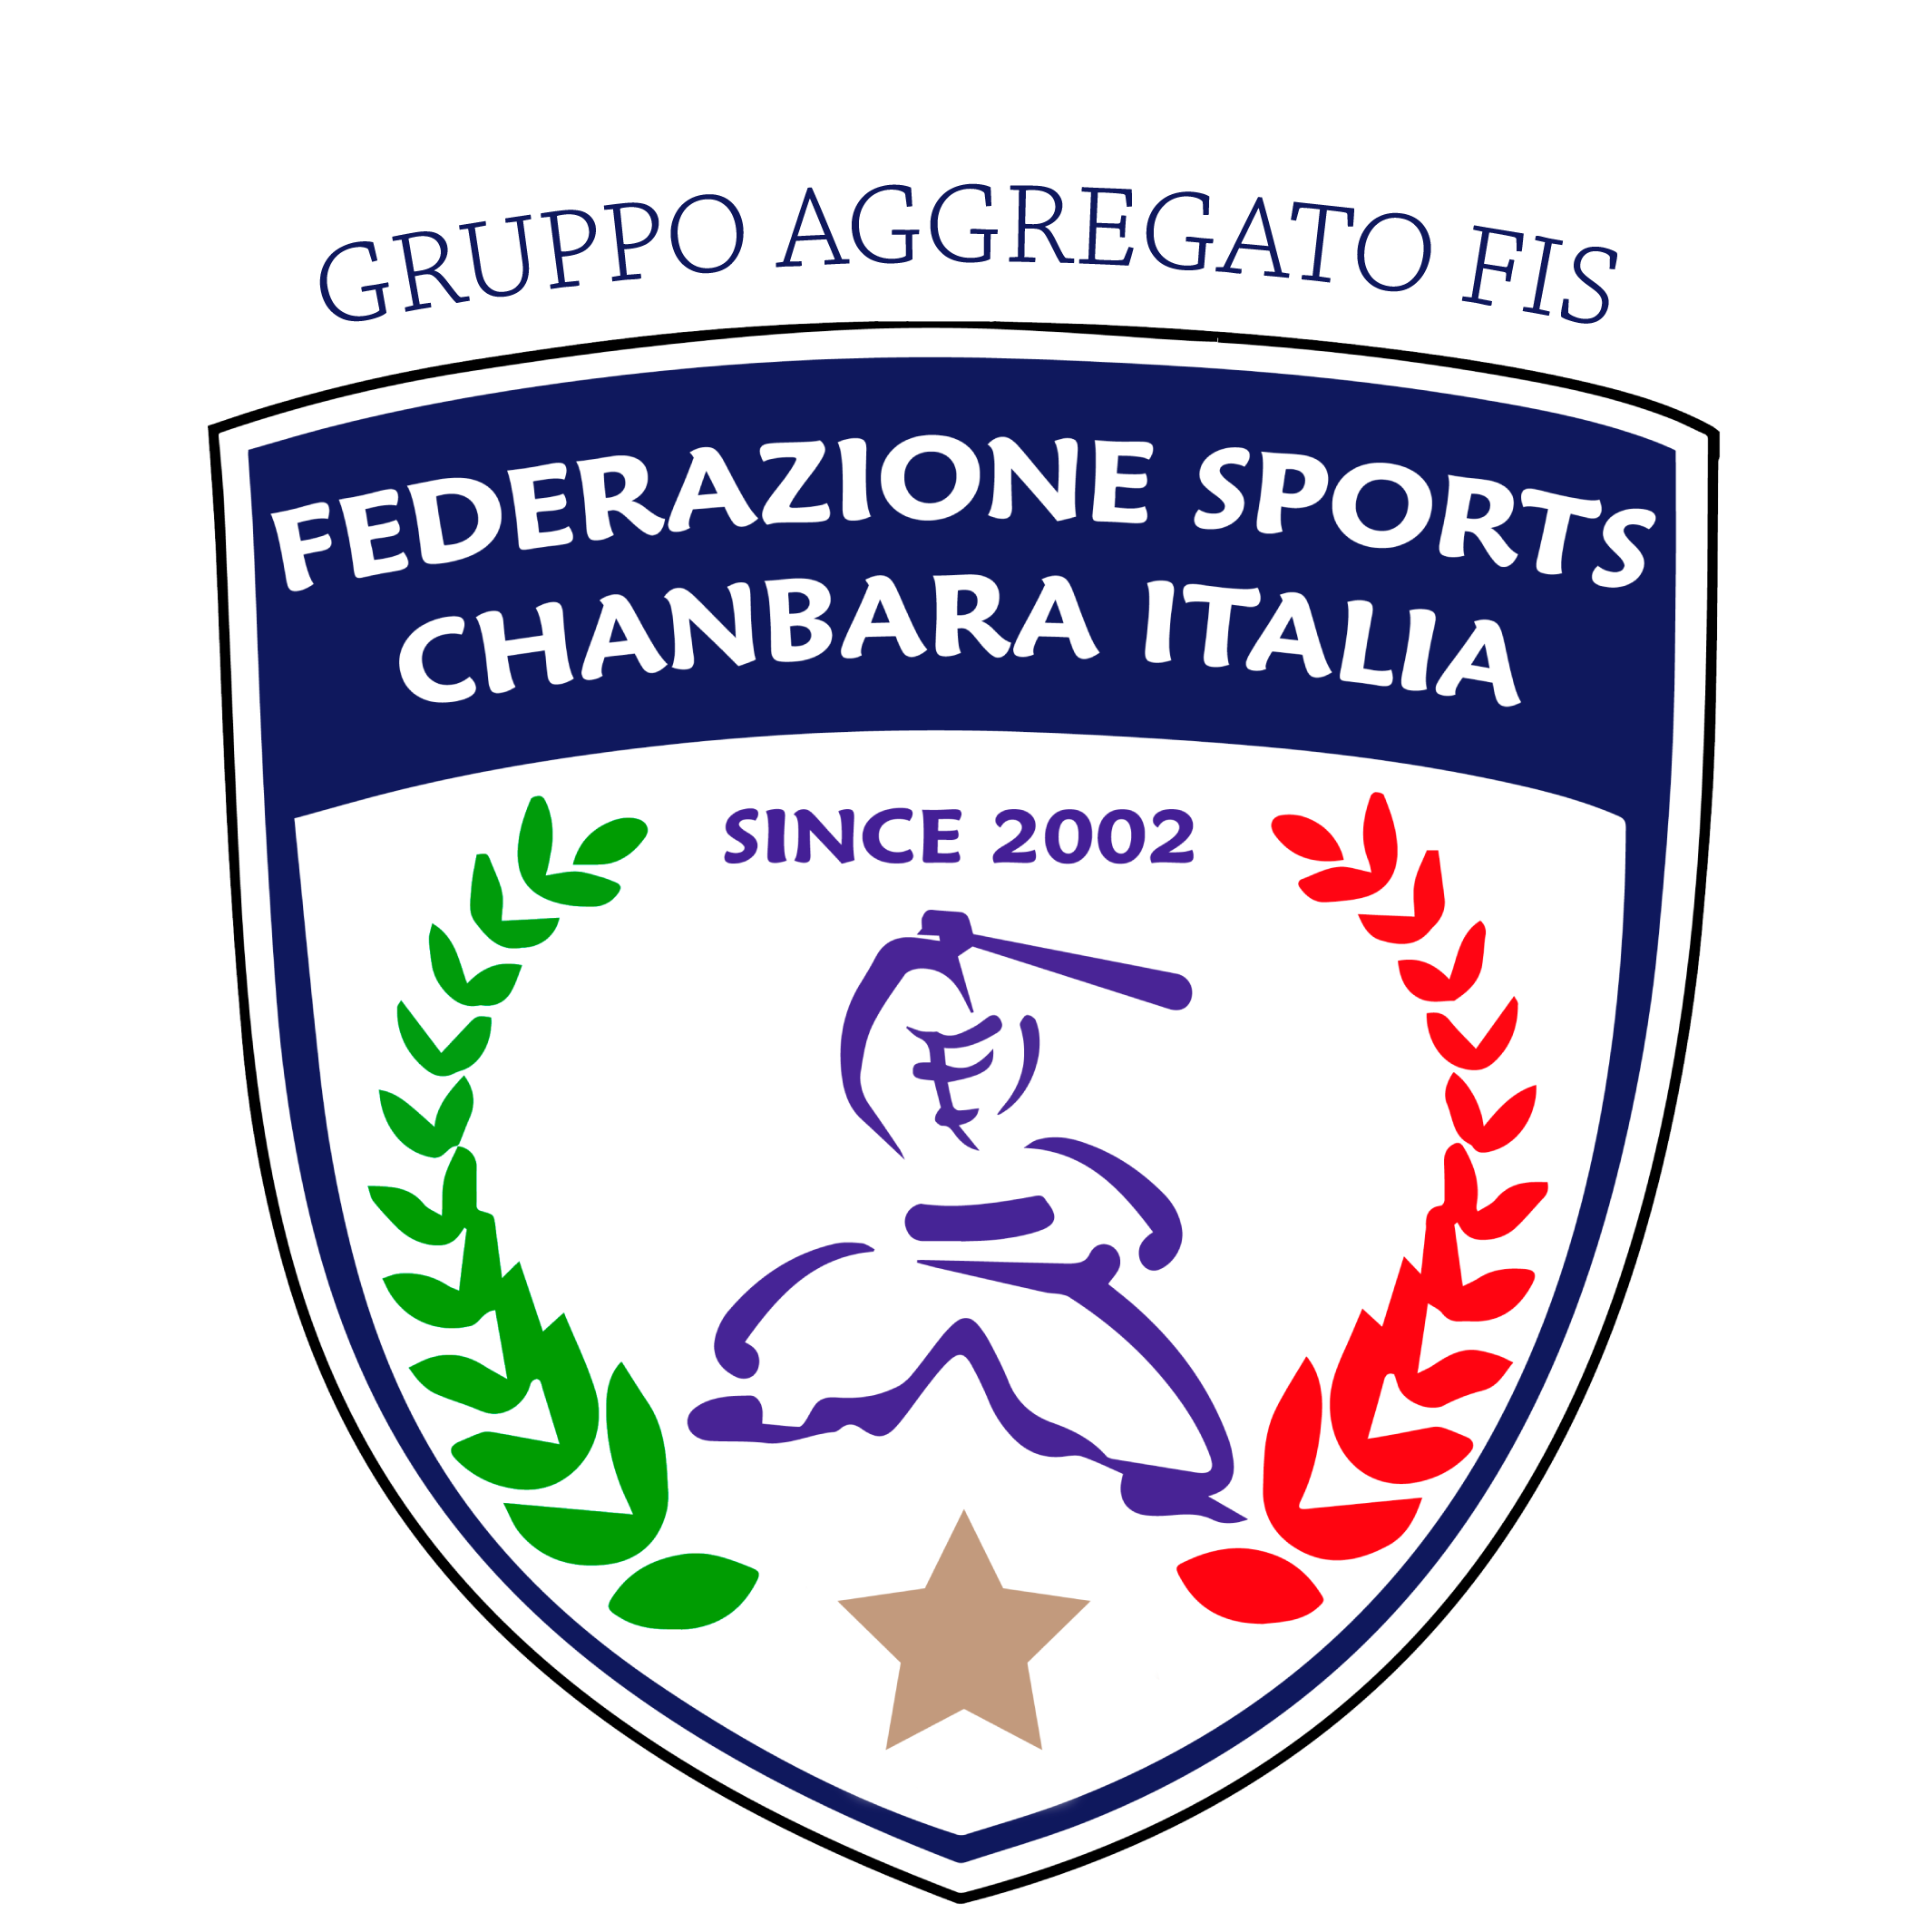 Federazione Sports Chanbara Italia